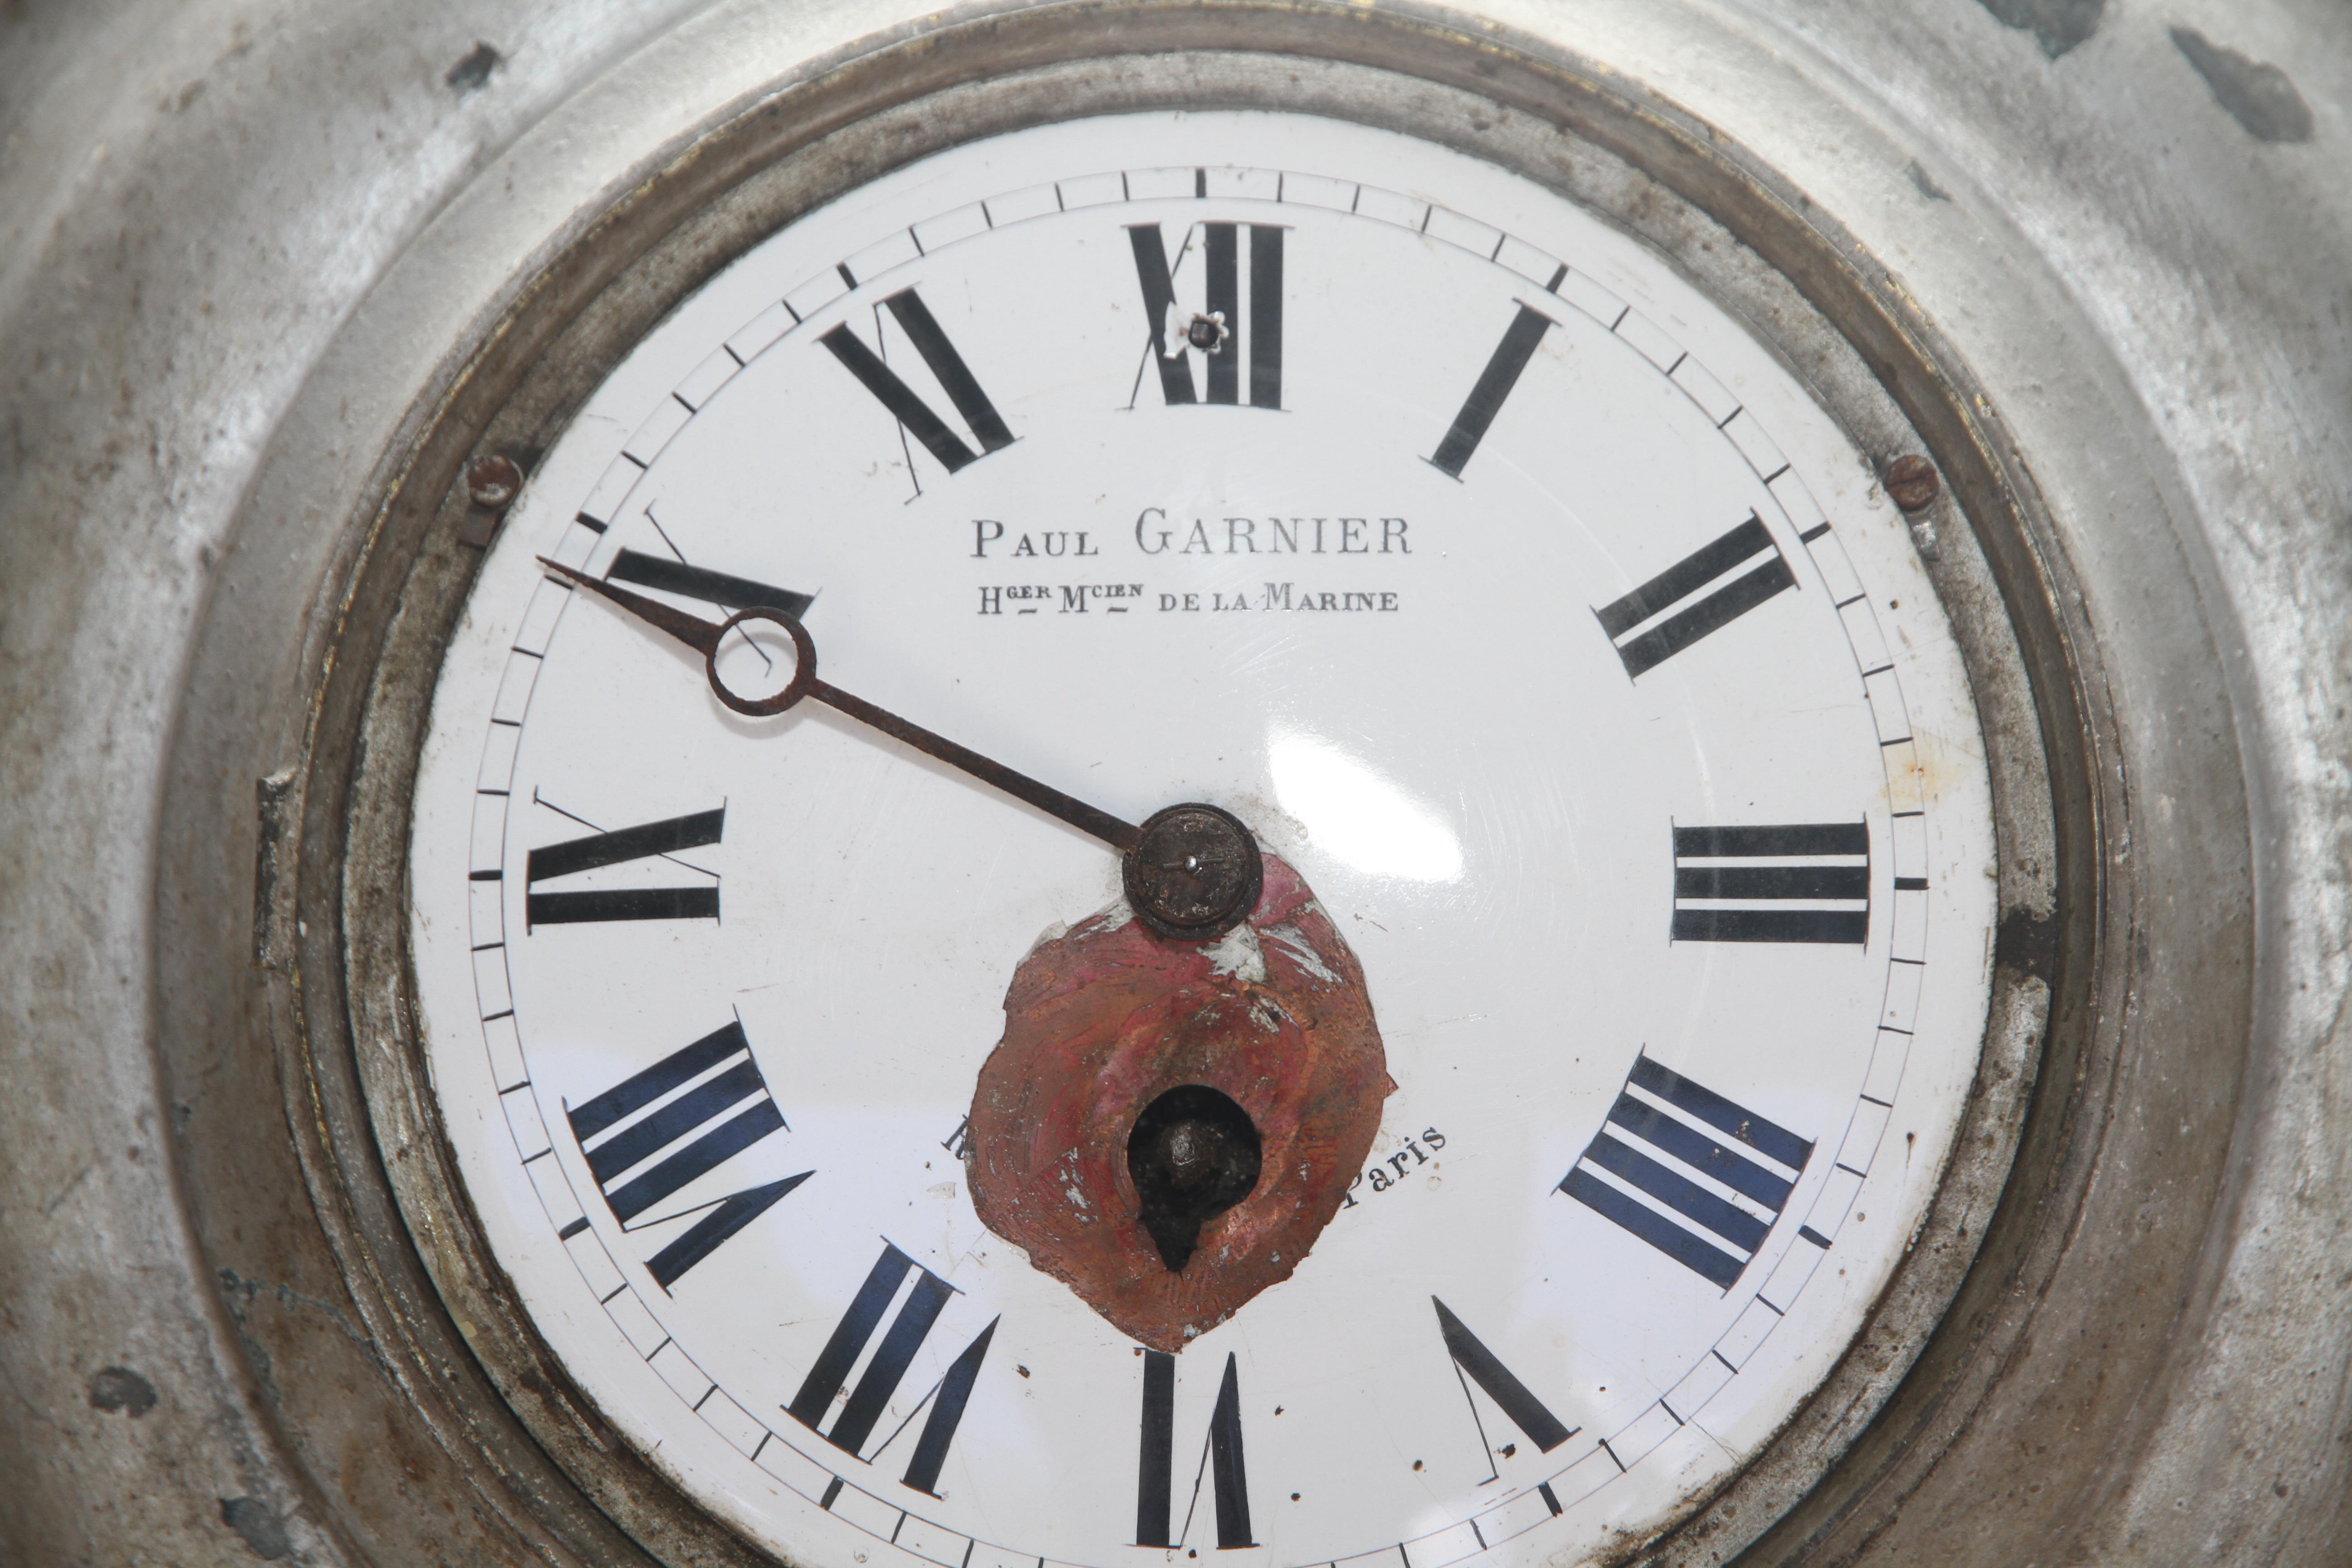 Antique French Zinc Clock, Paul Garnier, Hger Mcien de la Marine In Distressed Condition In Houston, TX